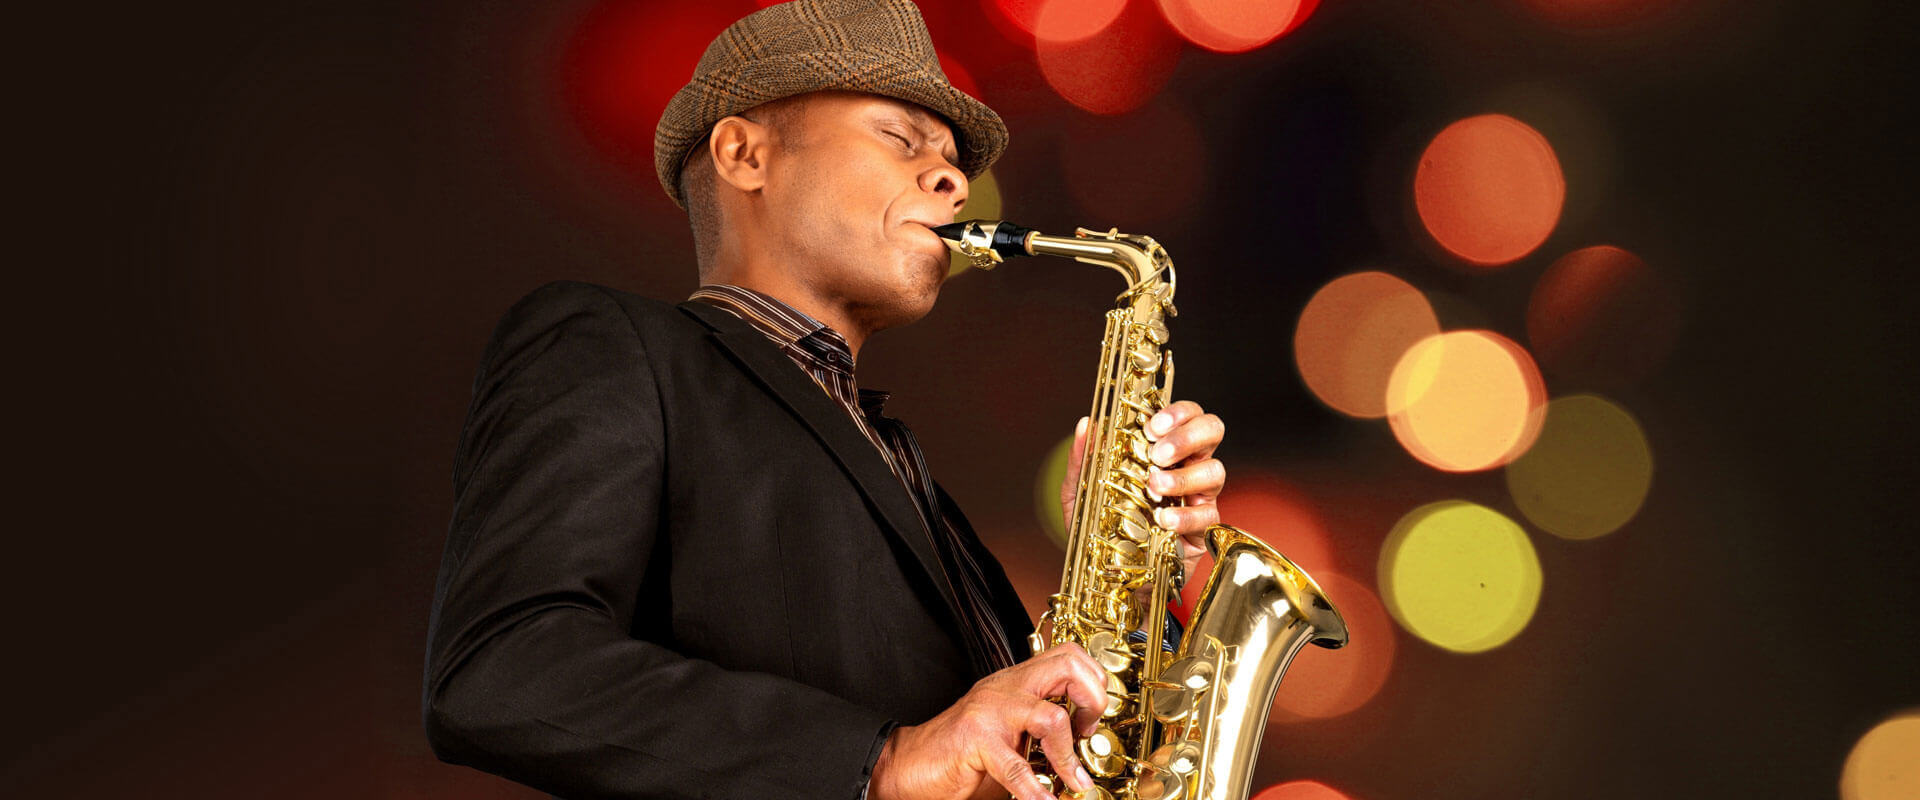 Saxophone Lessons Bovard, PA